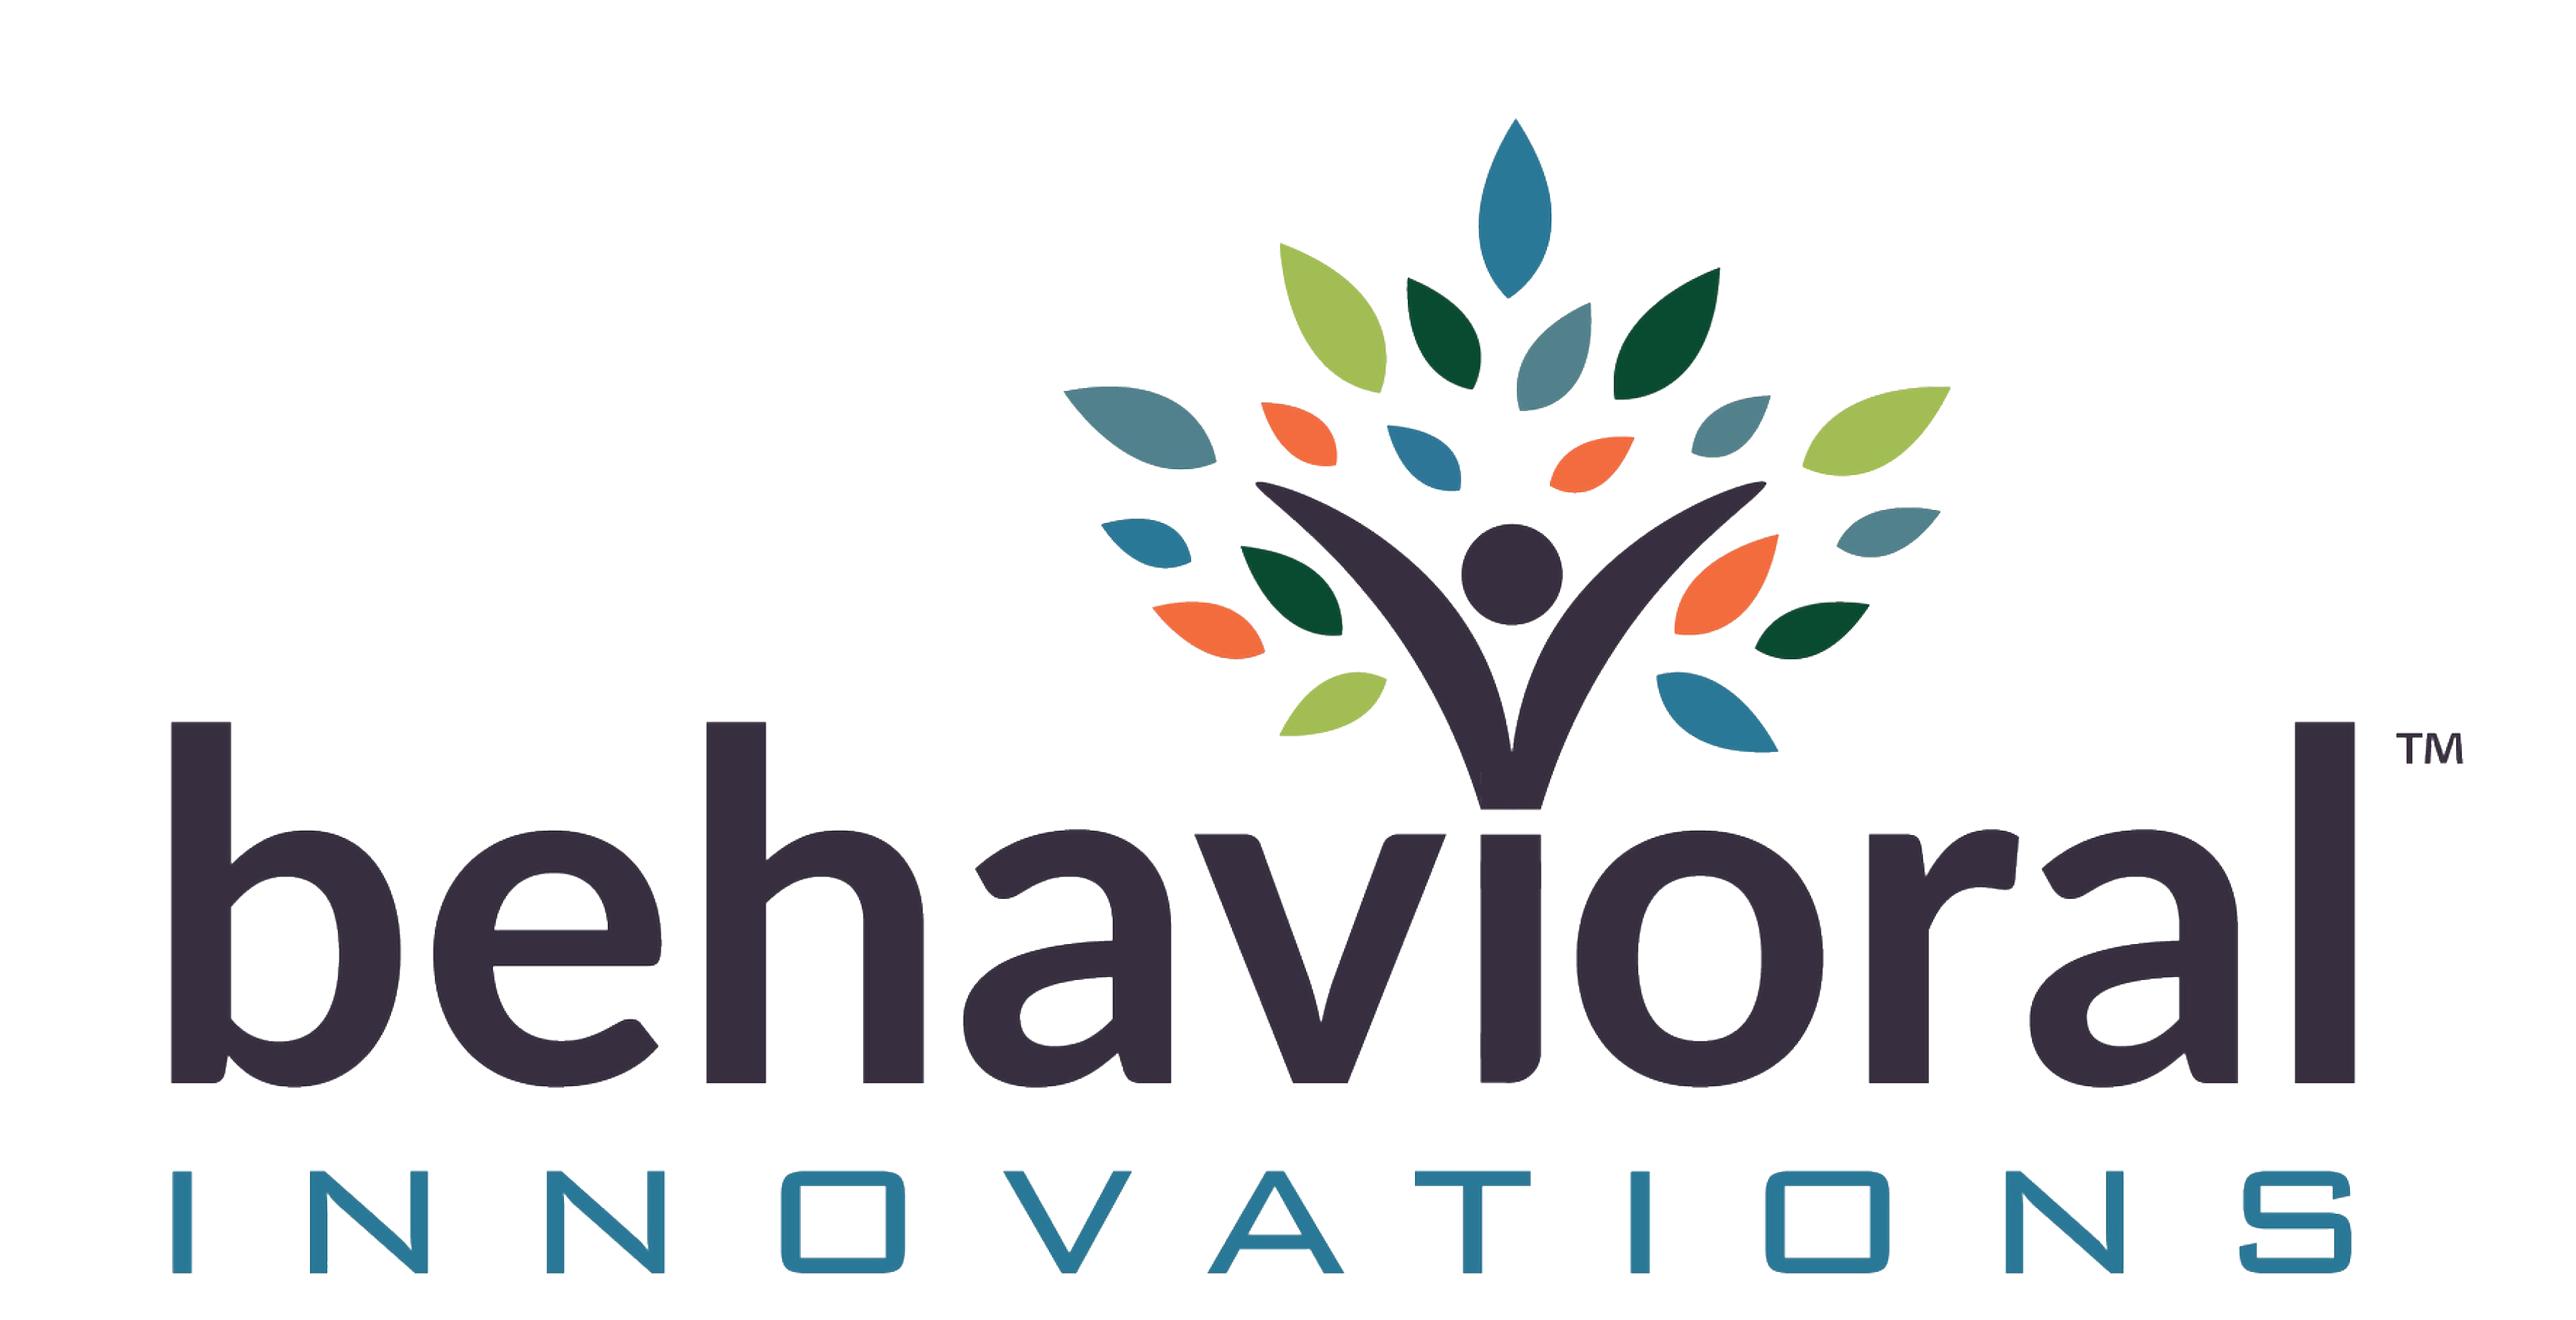 Behavioral Innovation - Retail Store